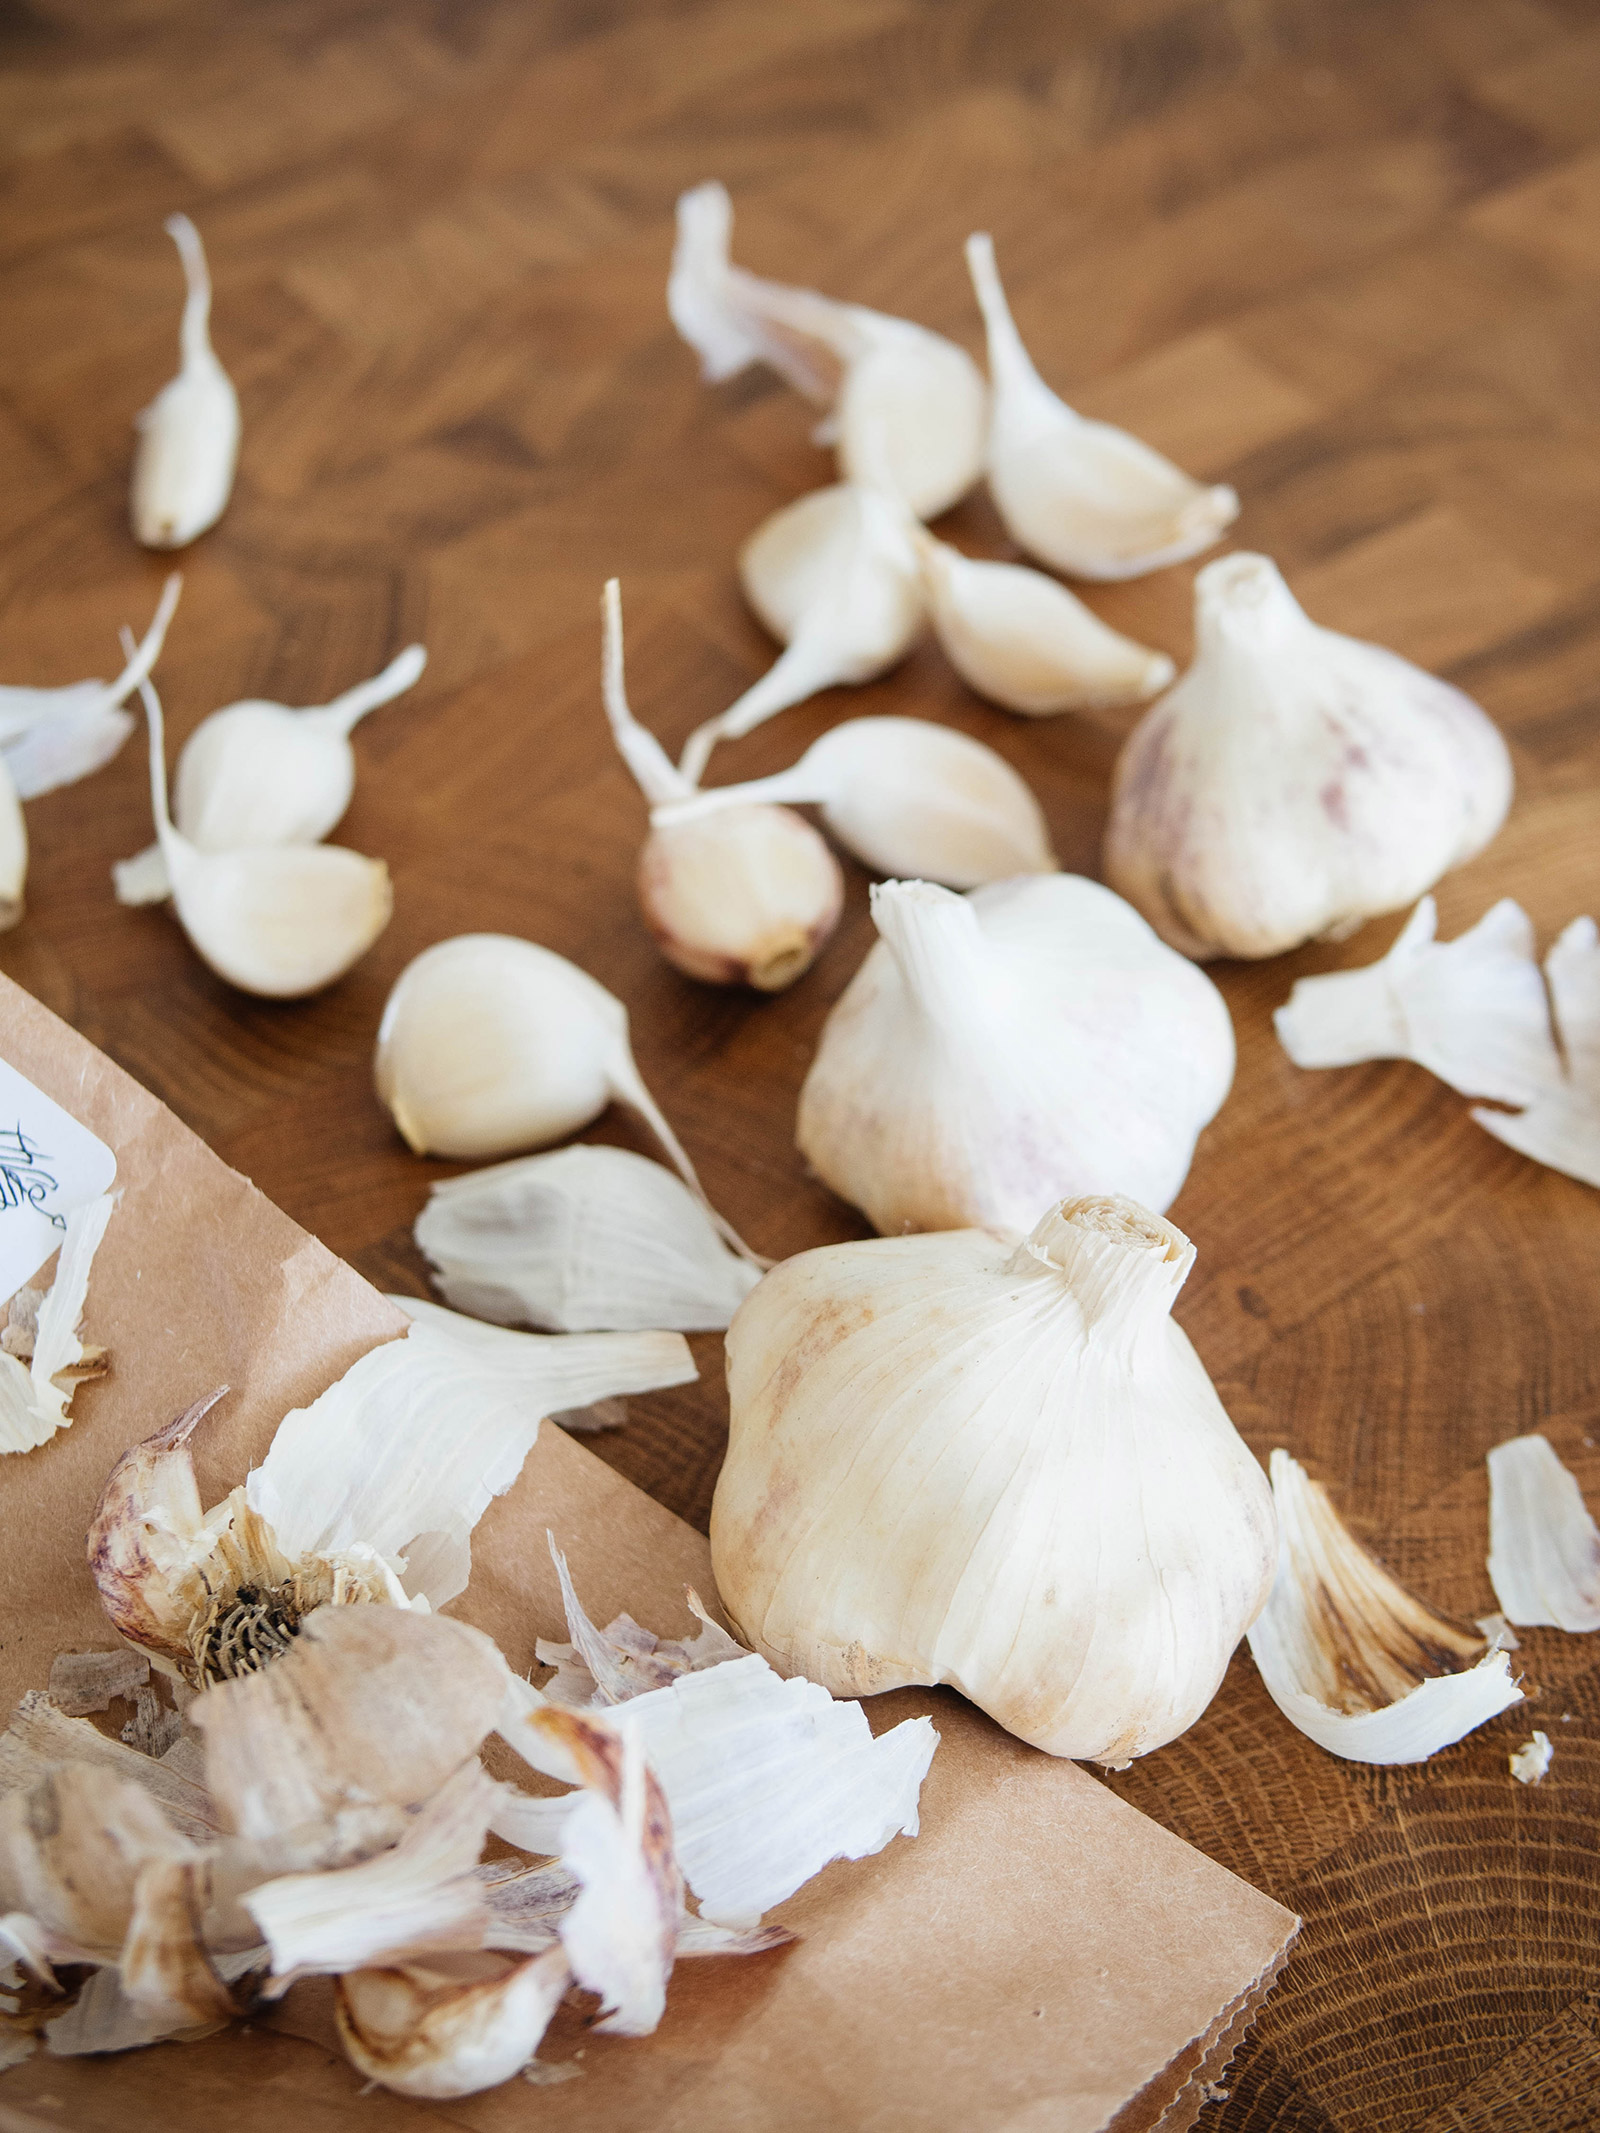 How to choose the best garlic varieties for your garden